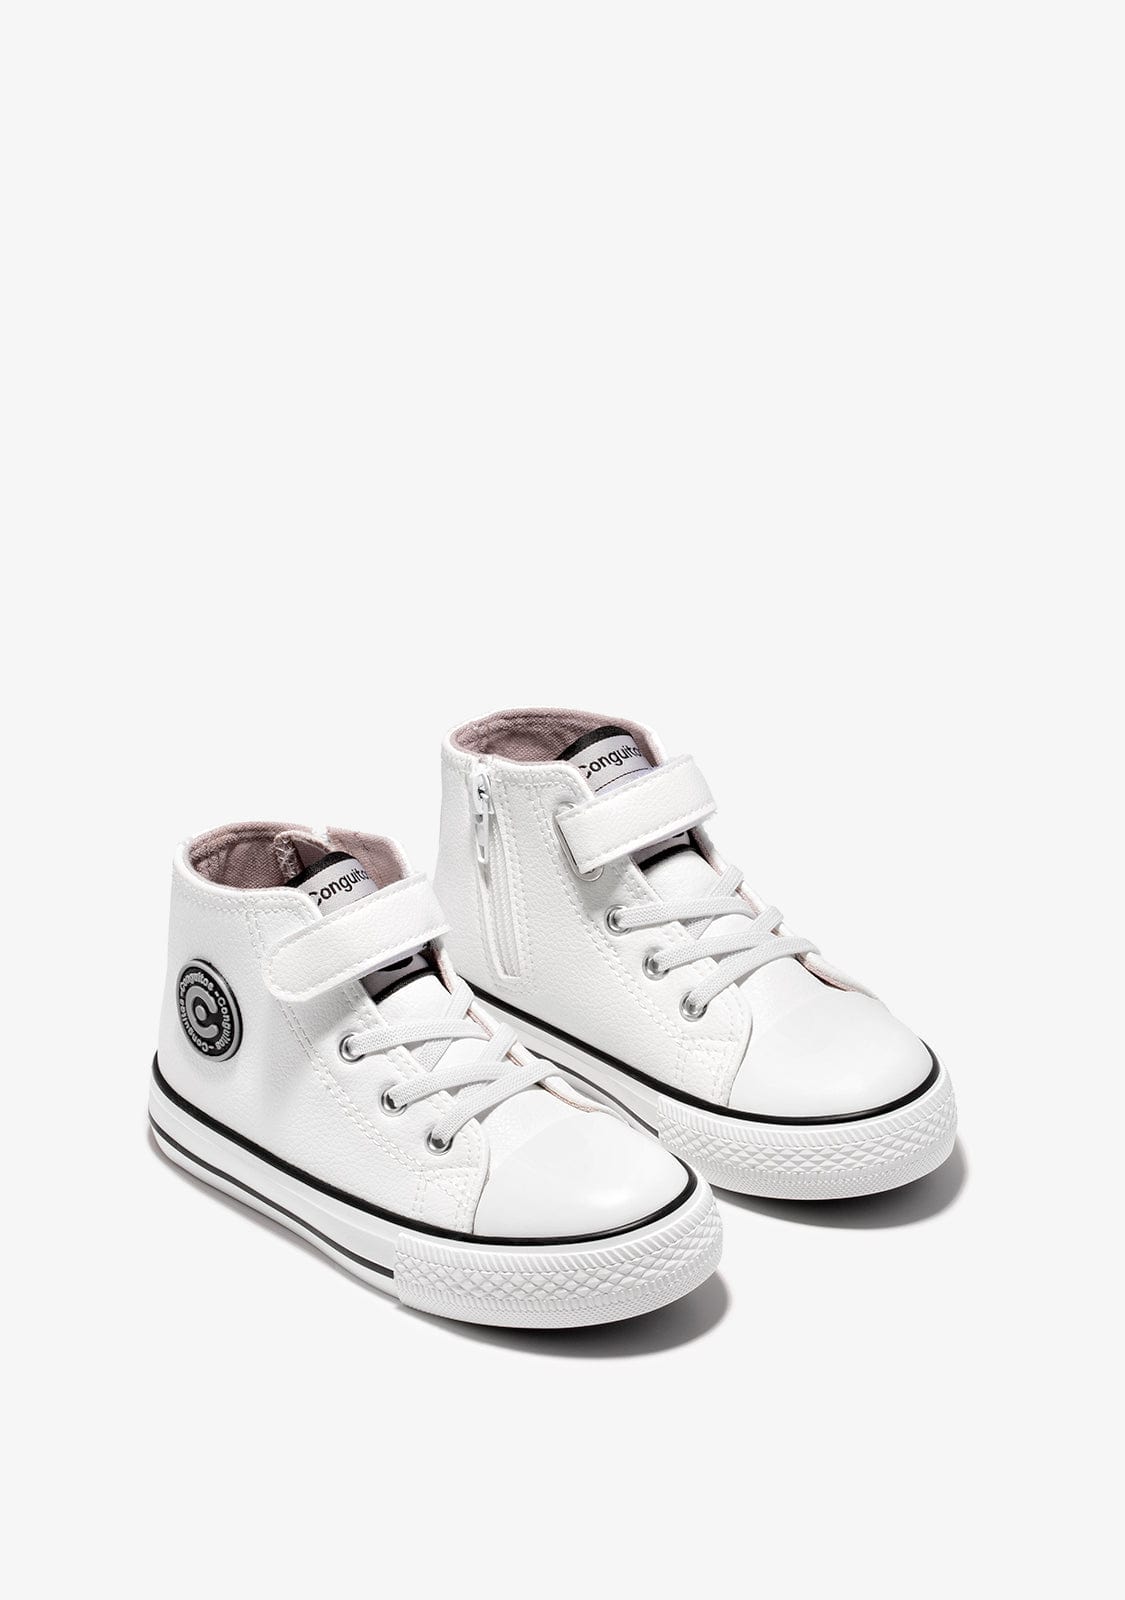 CONGUITOS Shoes Unisex White Adherent Strip Hi-Top Sneakers Napa